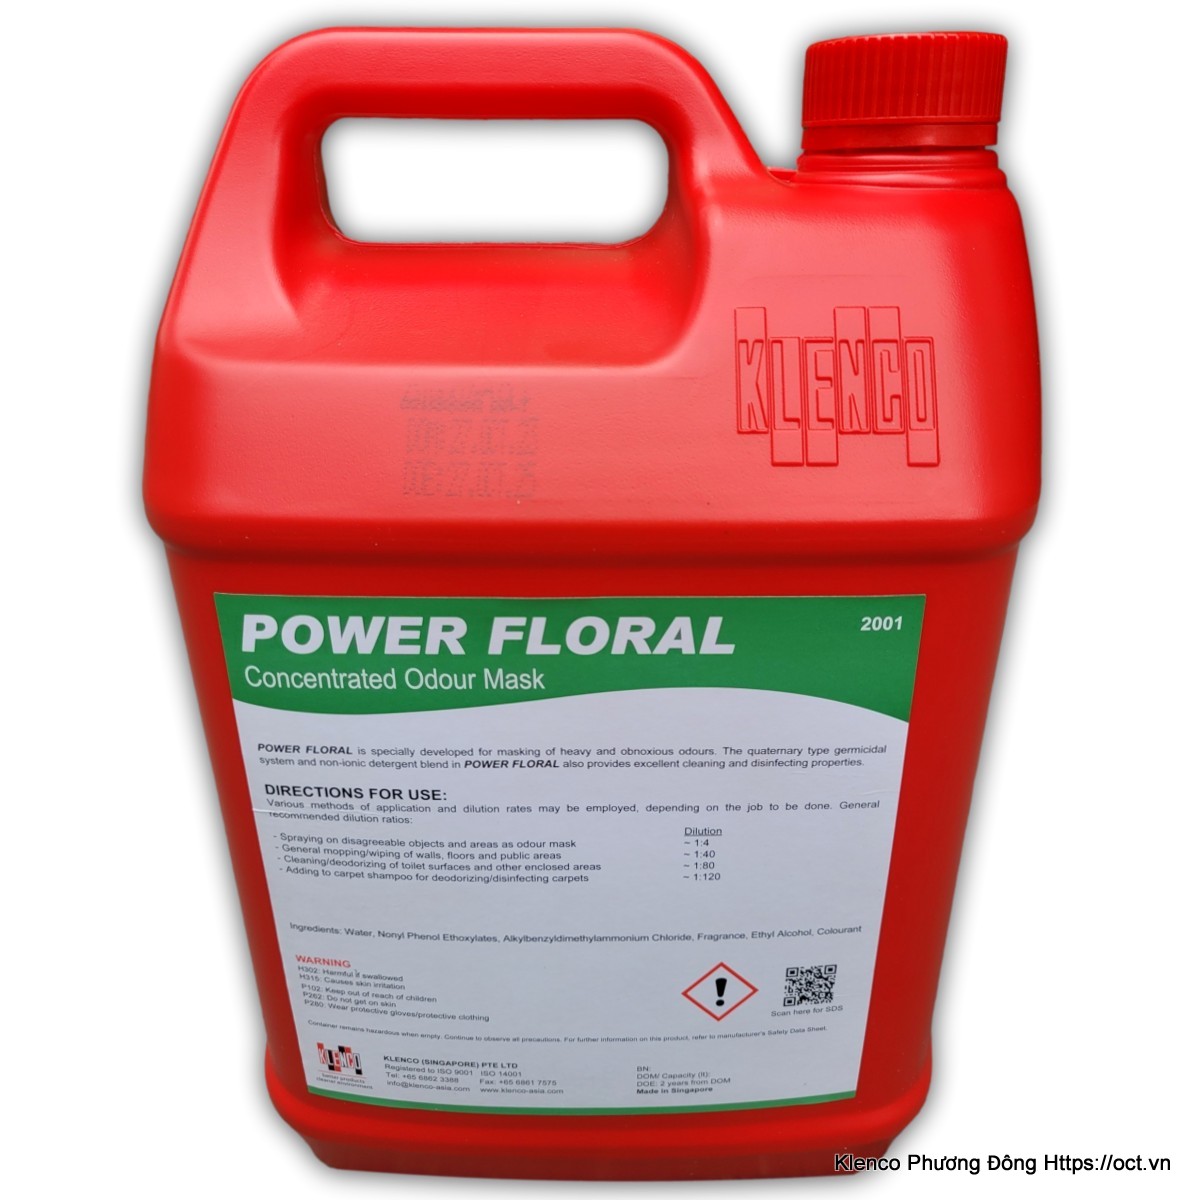 power floral 5L klenco chemicals new 2023